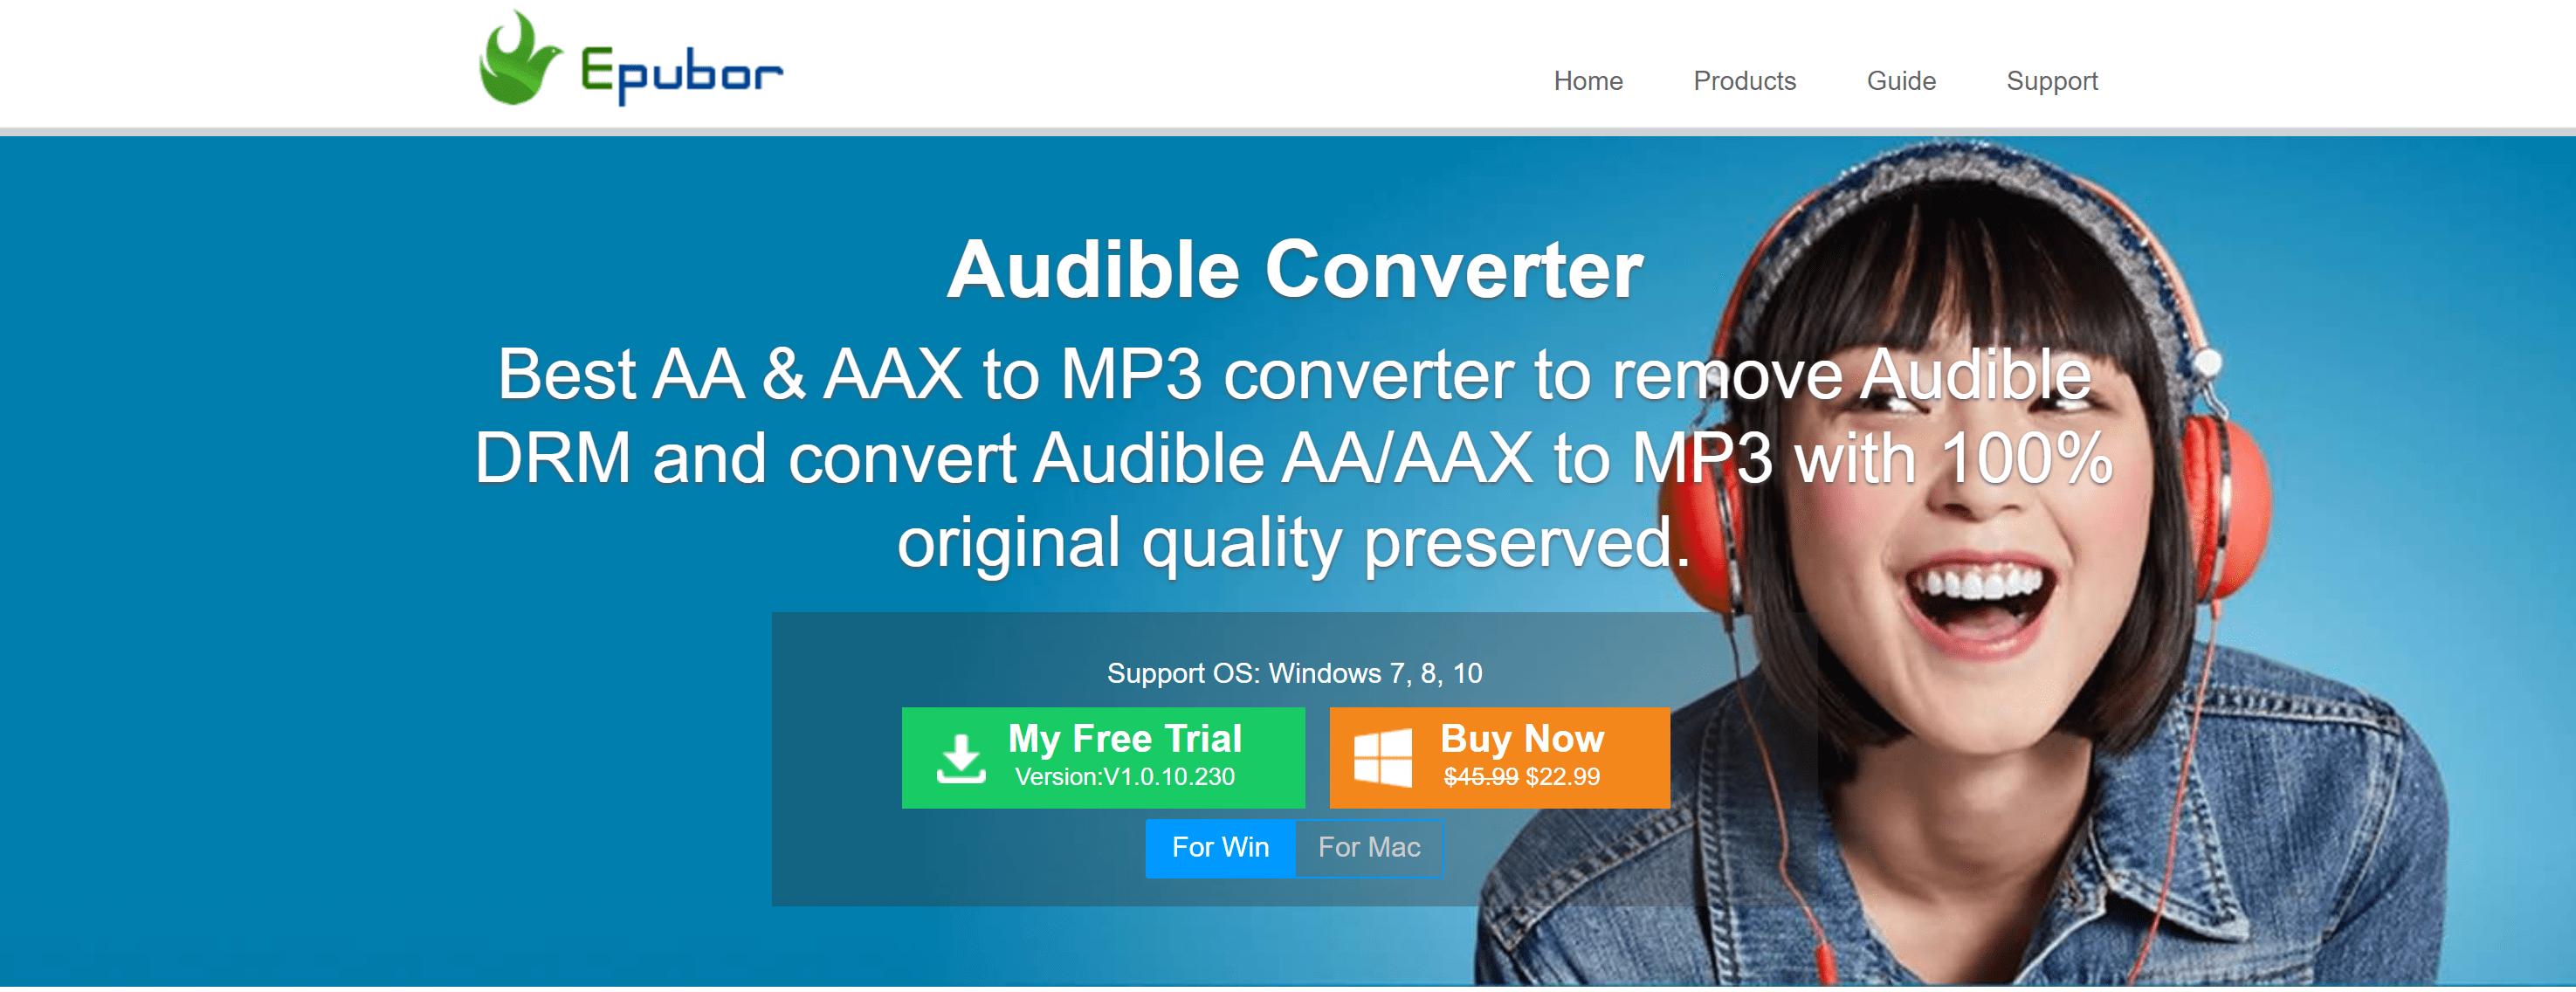 conversion speed of epubor audible converter